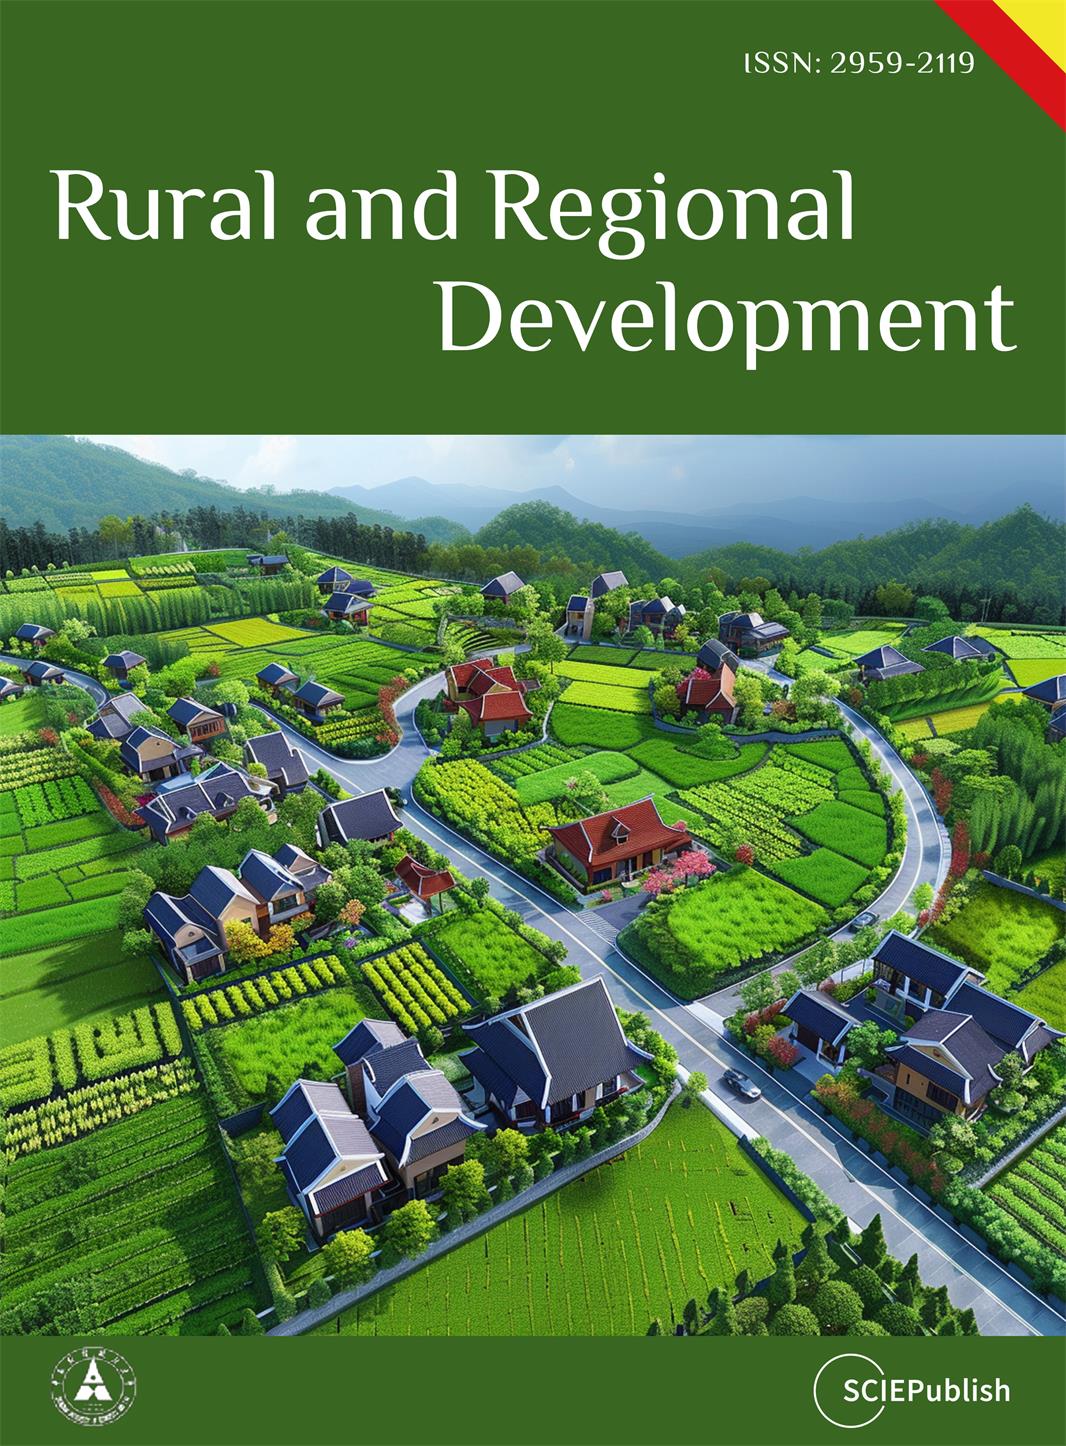 Rural and Regional Development -logo